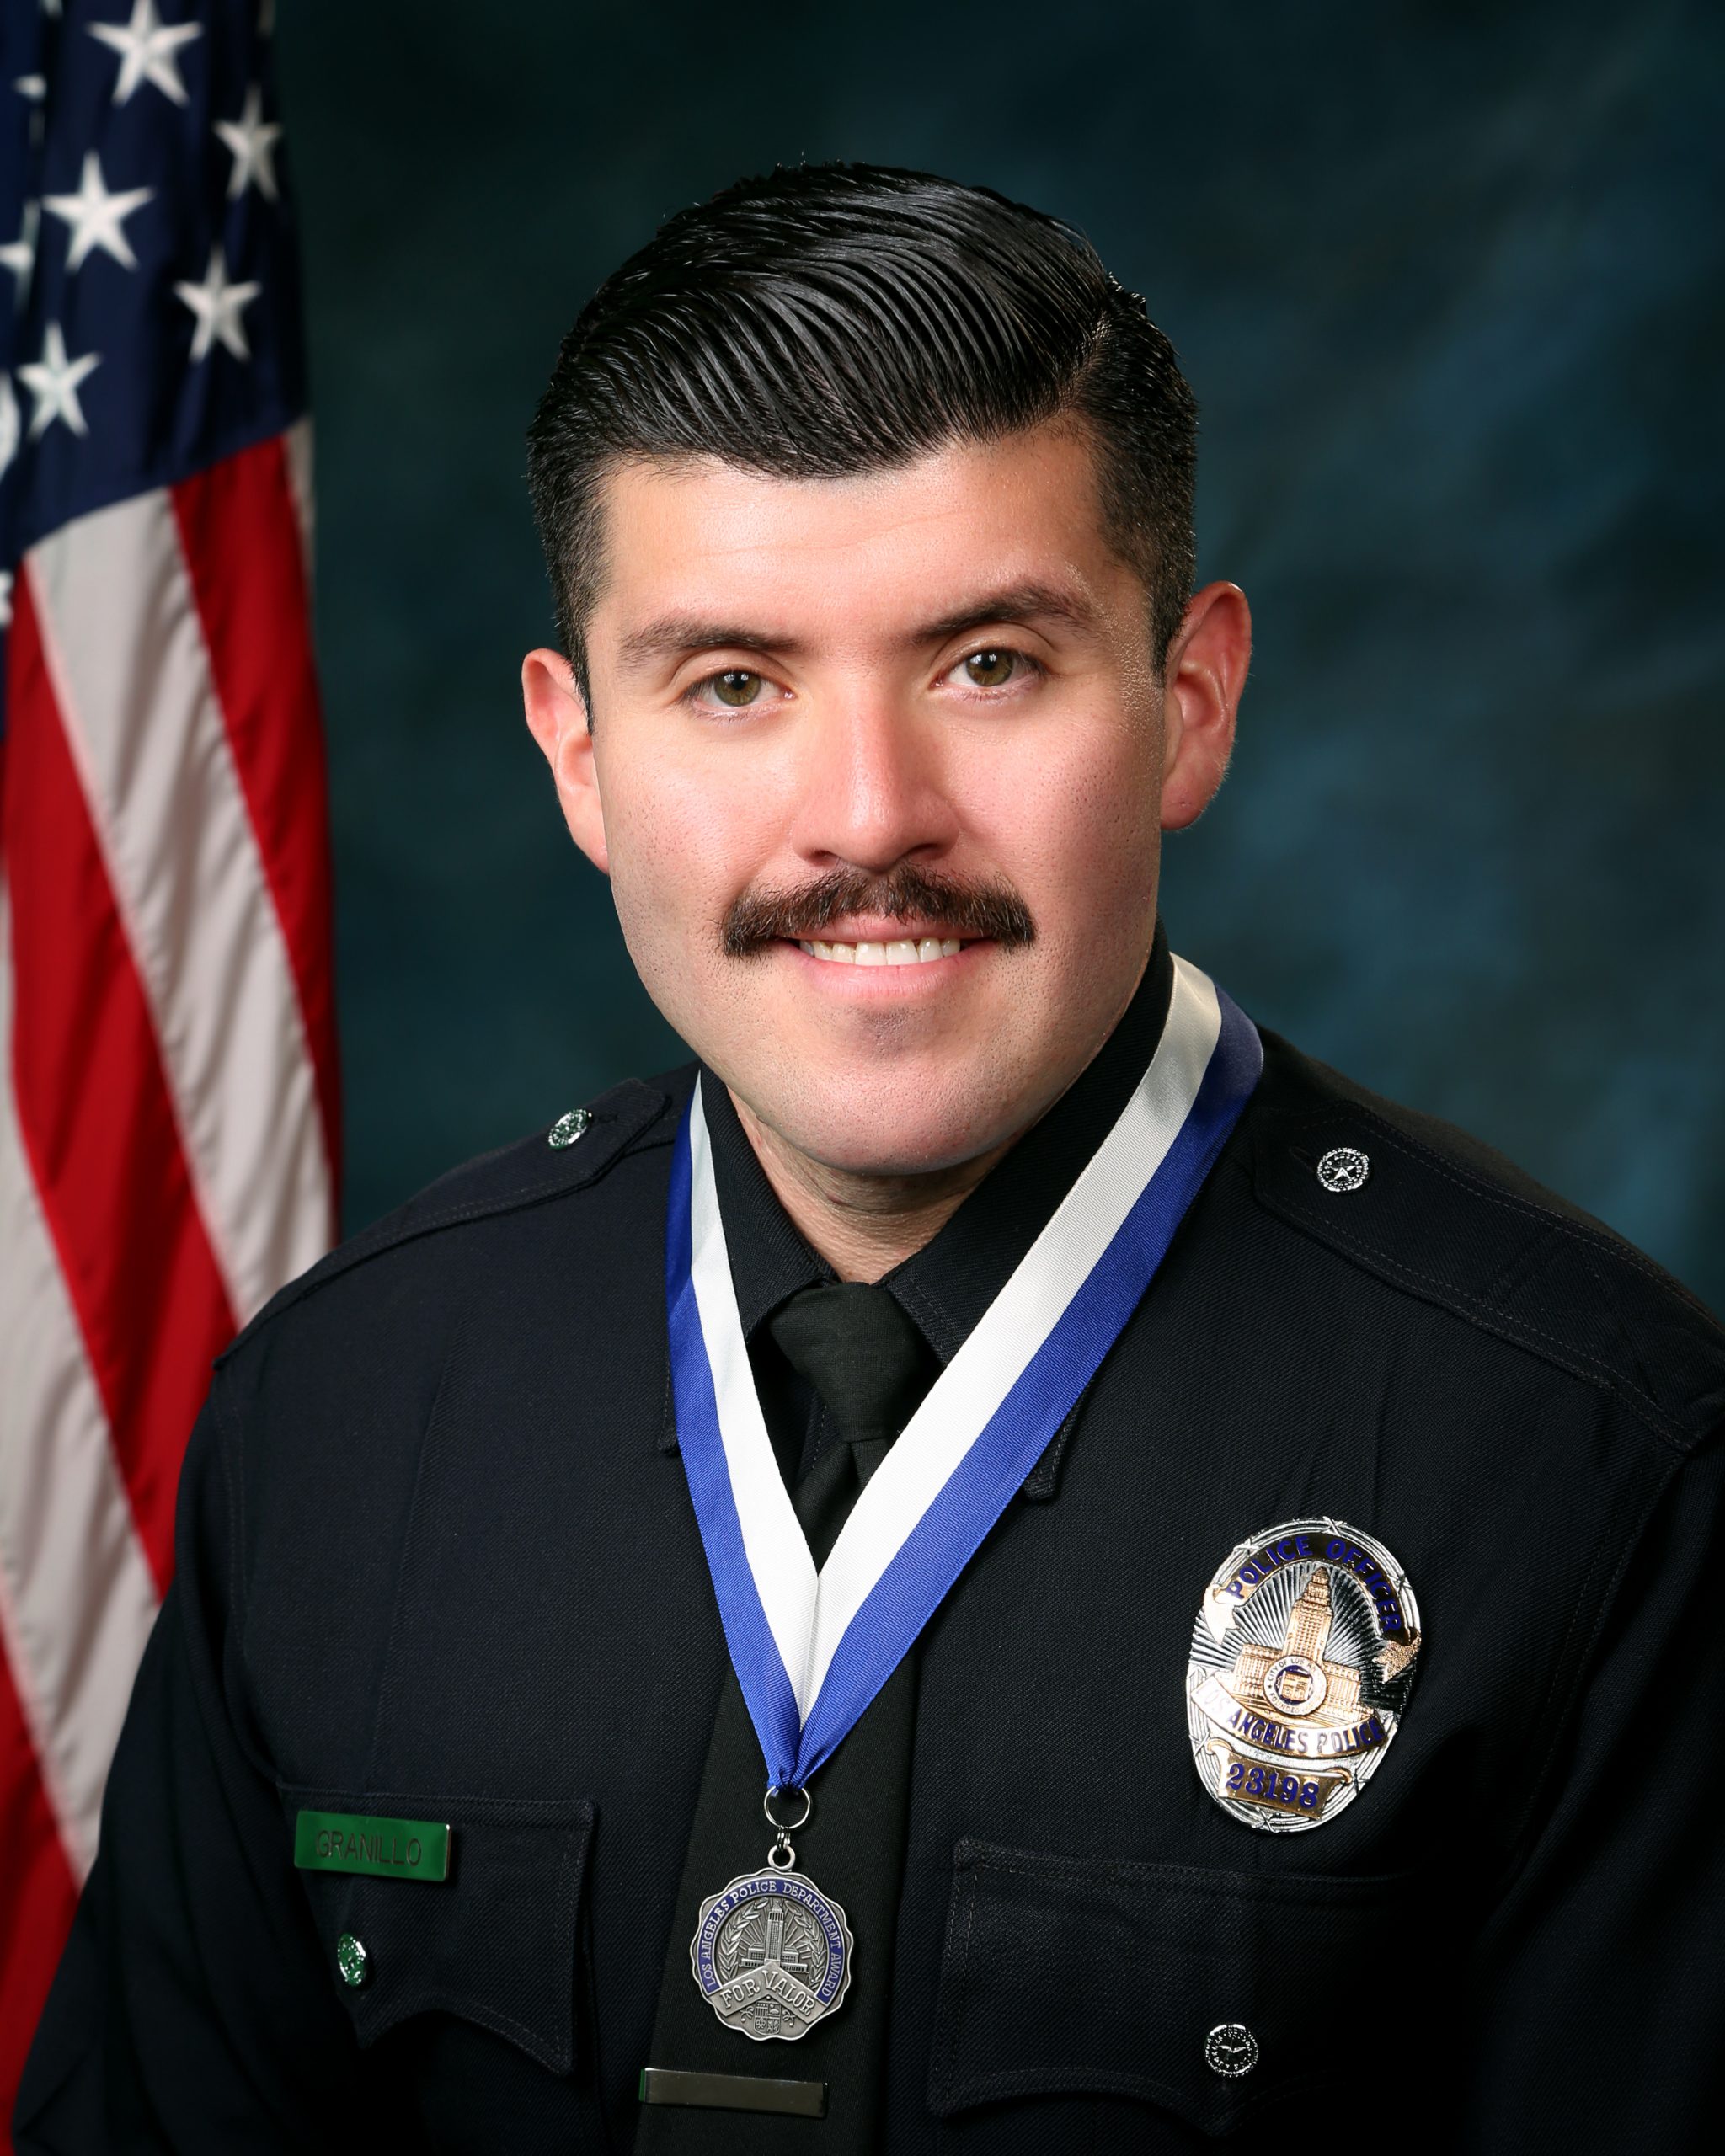 Officer Oscar Granillo